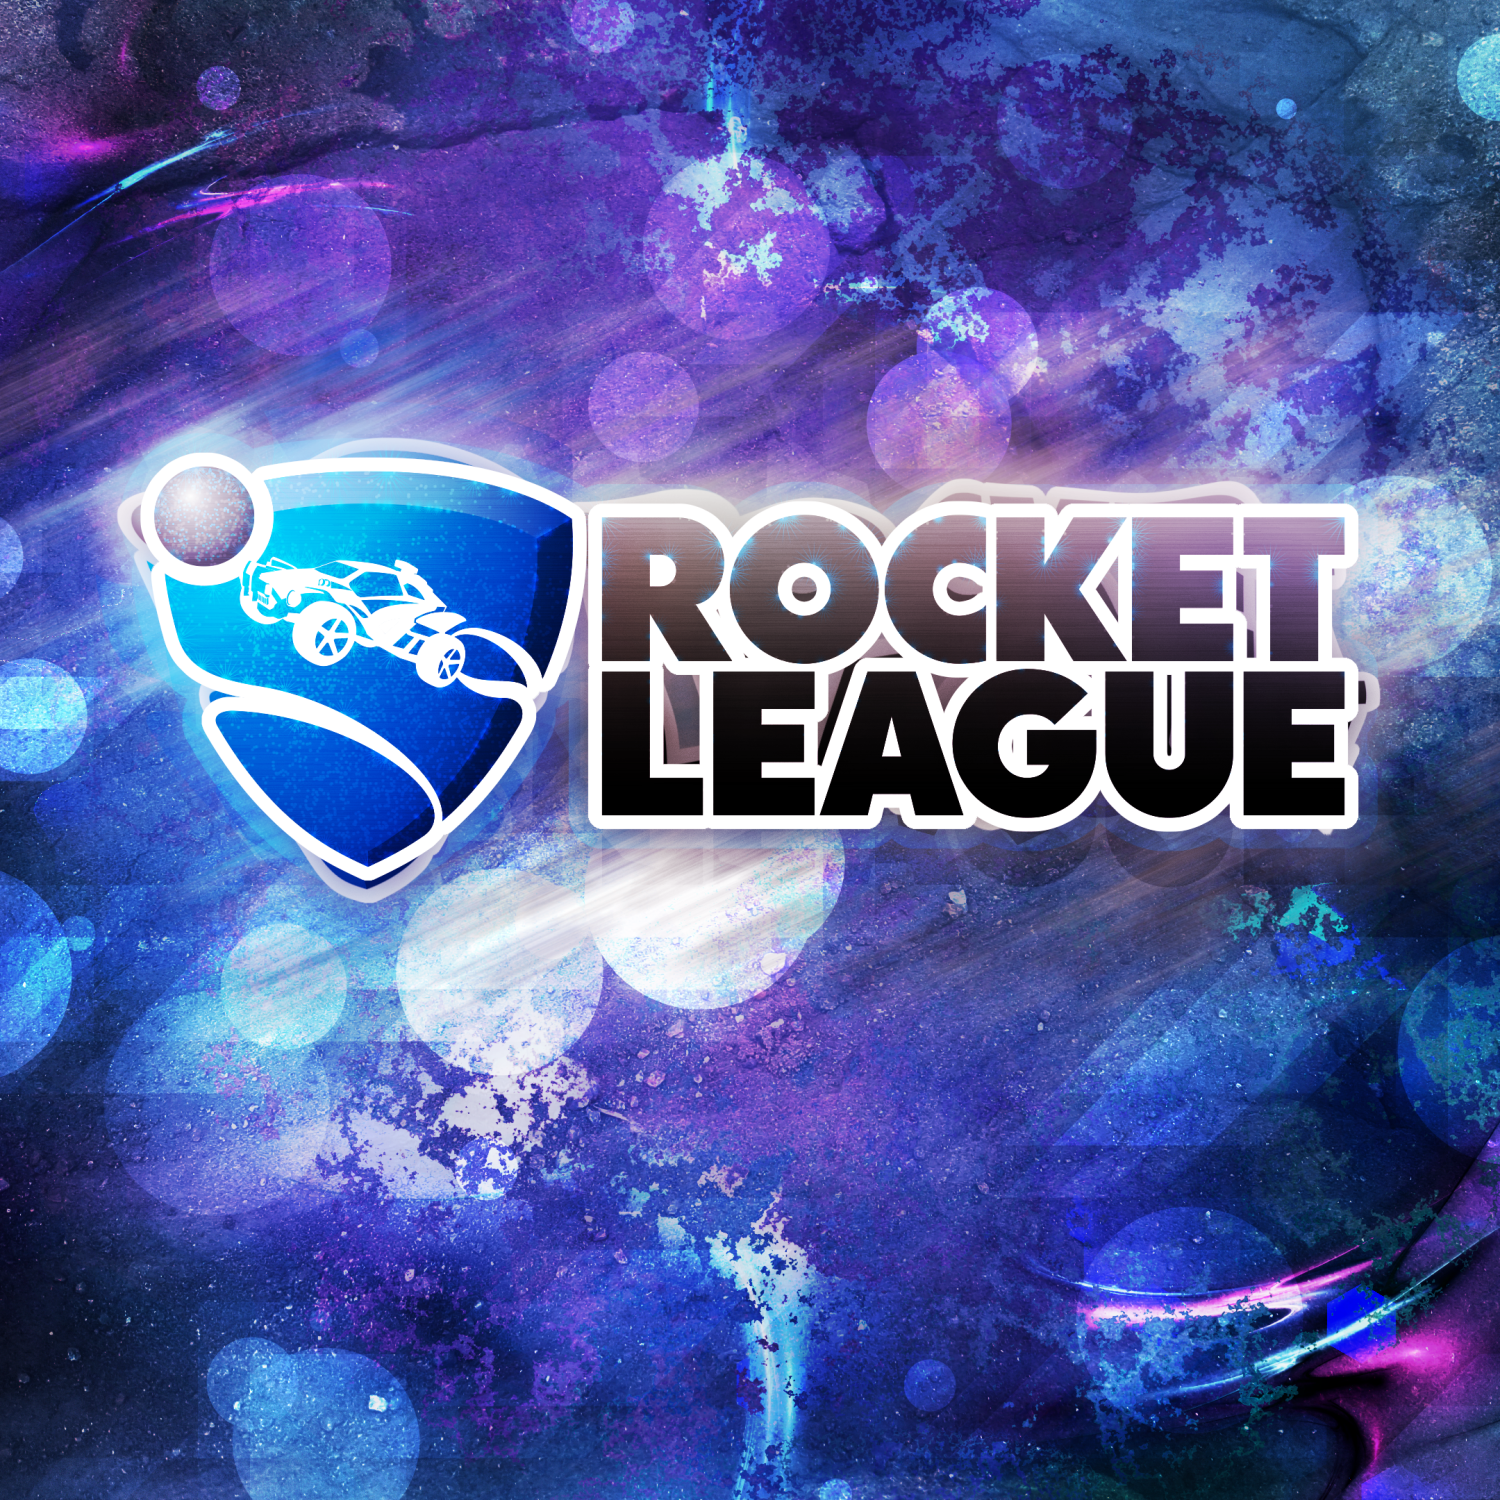 Rocket League Pfp by Game-BeatX14